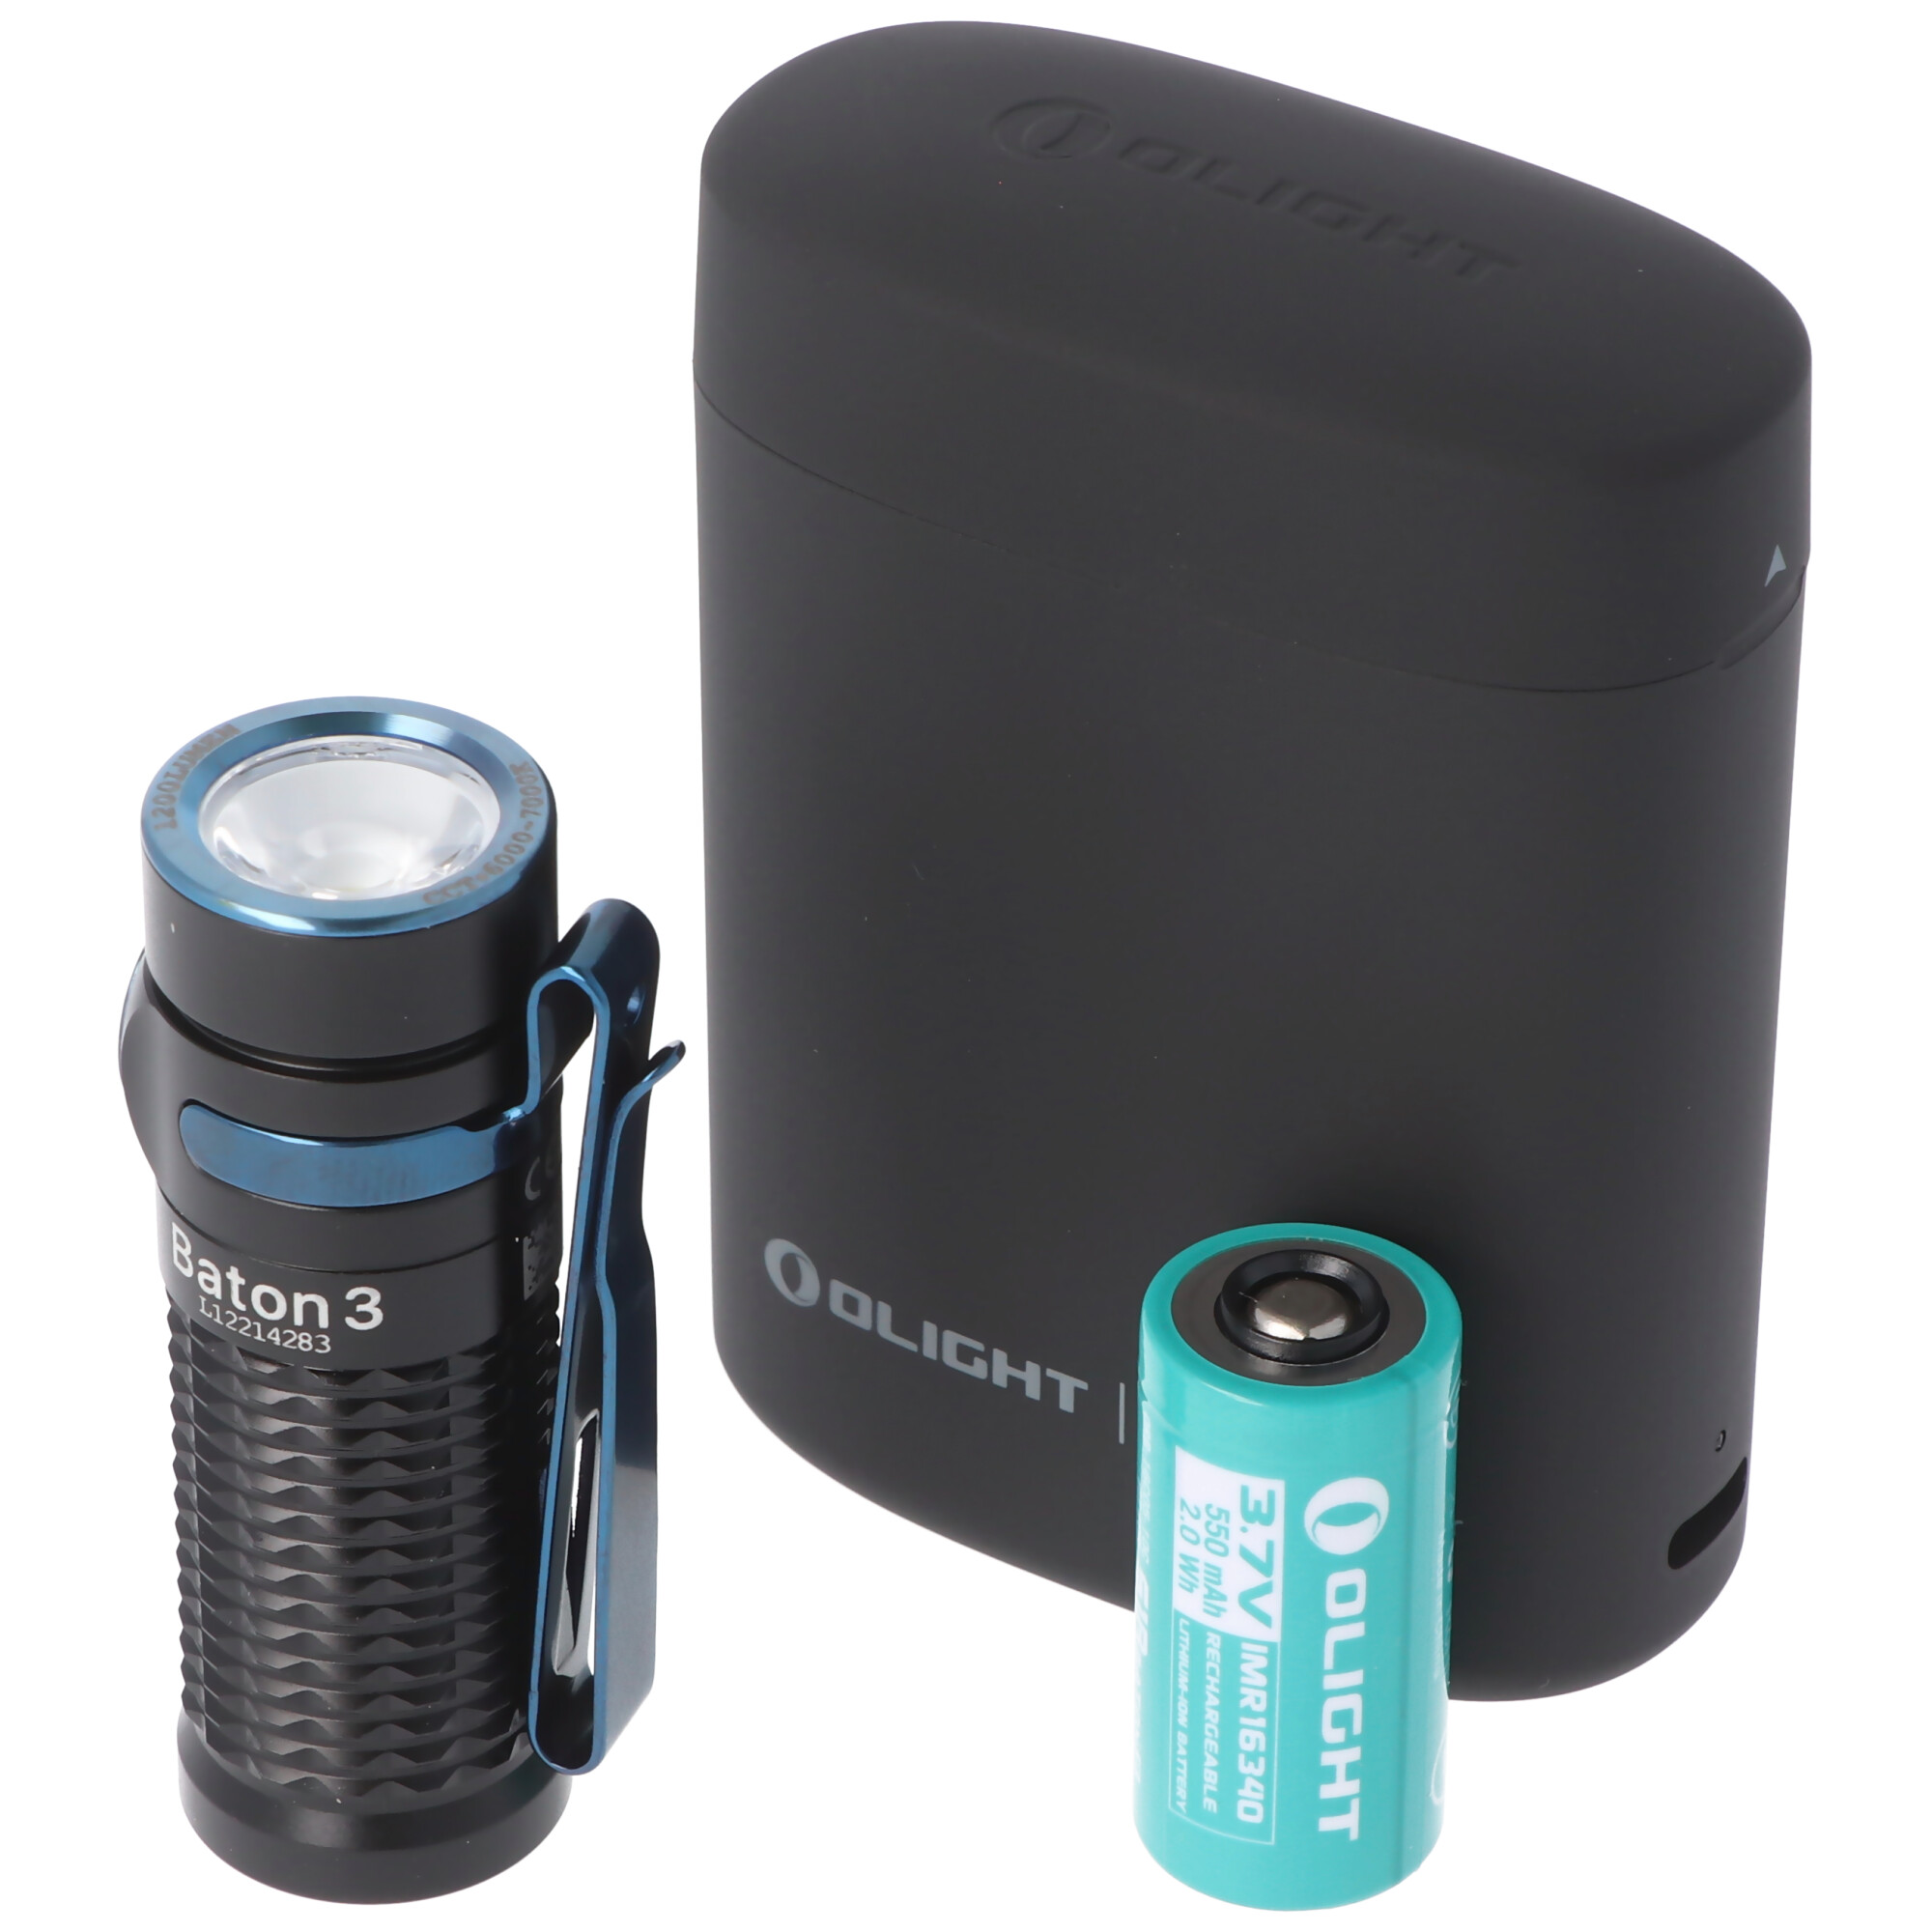 Olight Baton 3 Premium Edition, LED-Taschenlampe Baton 3 mit Ladecase schwarz, drahtloses Laden, inklusive Akku und Baton 3 Ladecase schwarz